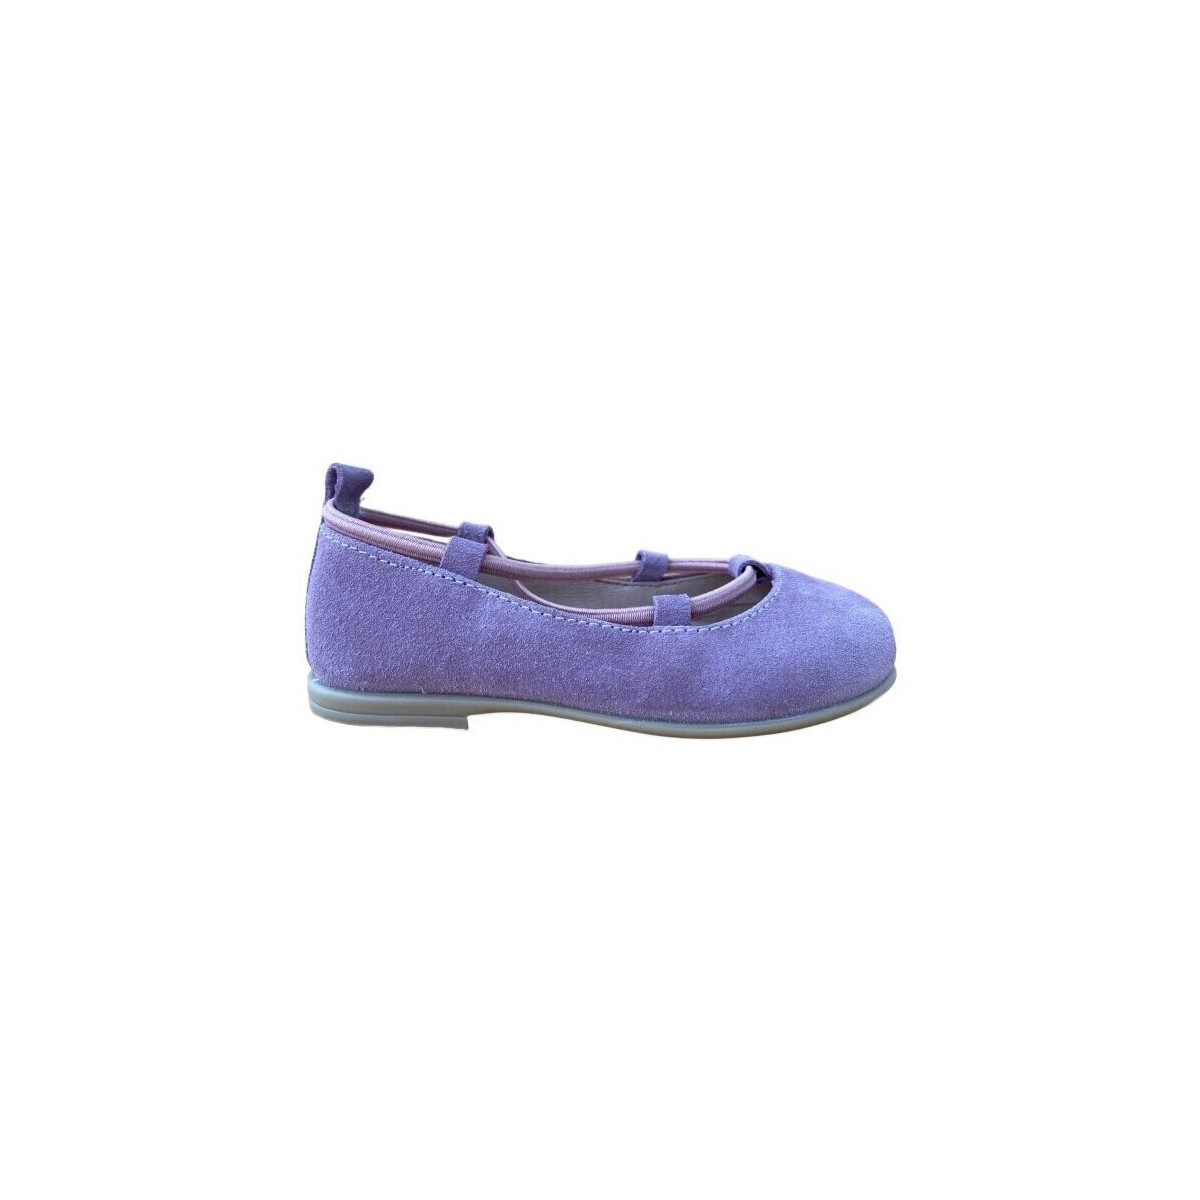 Chaussures Fille Ballerines / babies Gorila 28358-18 Violet